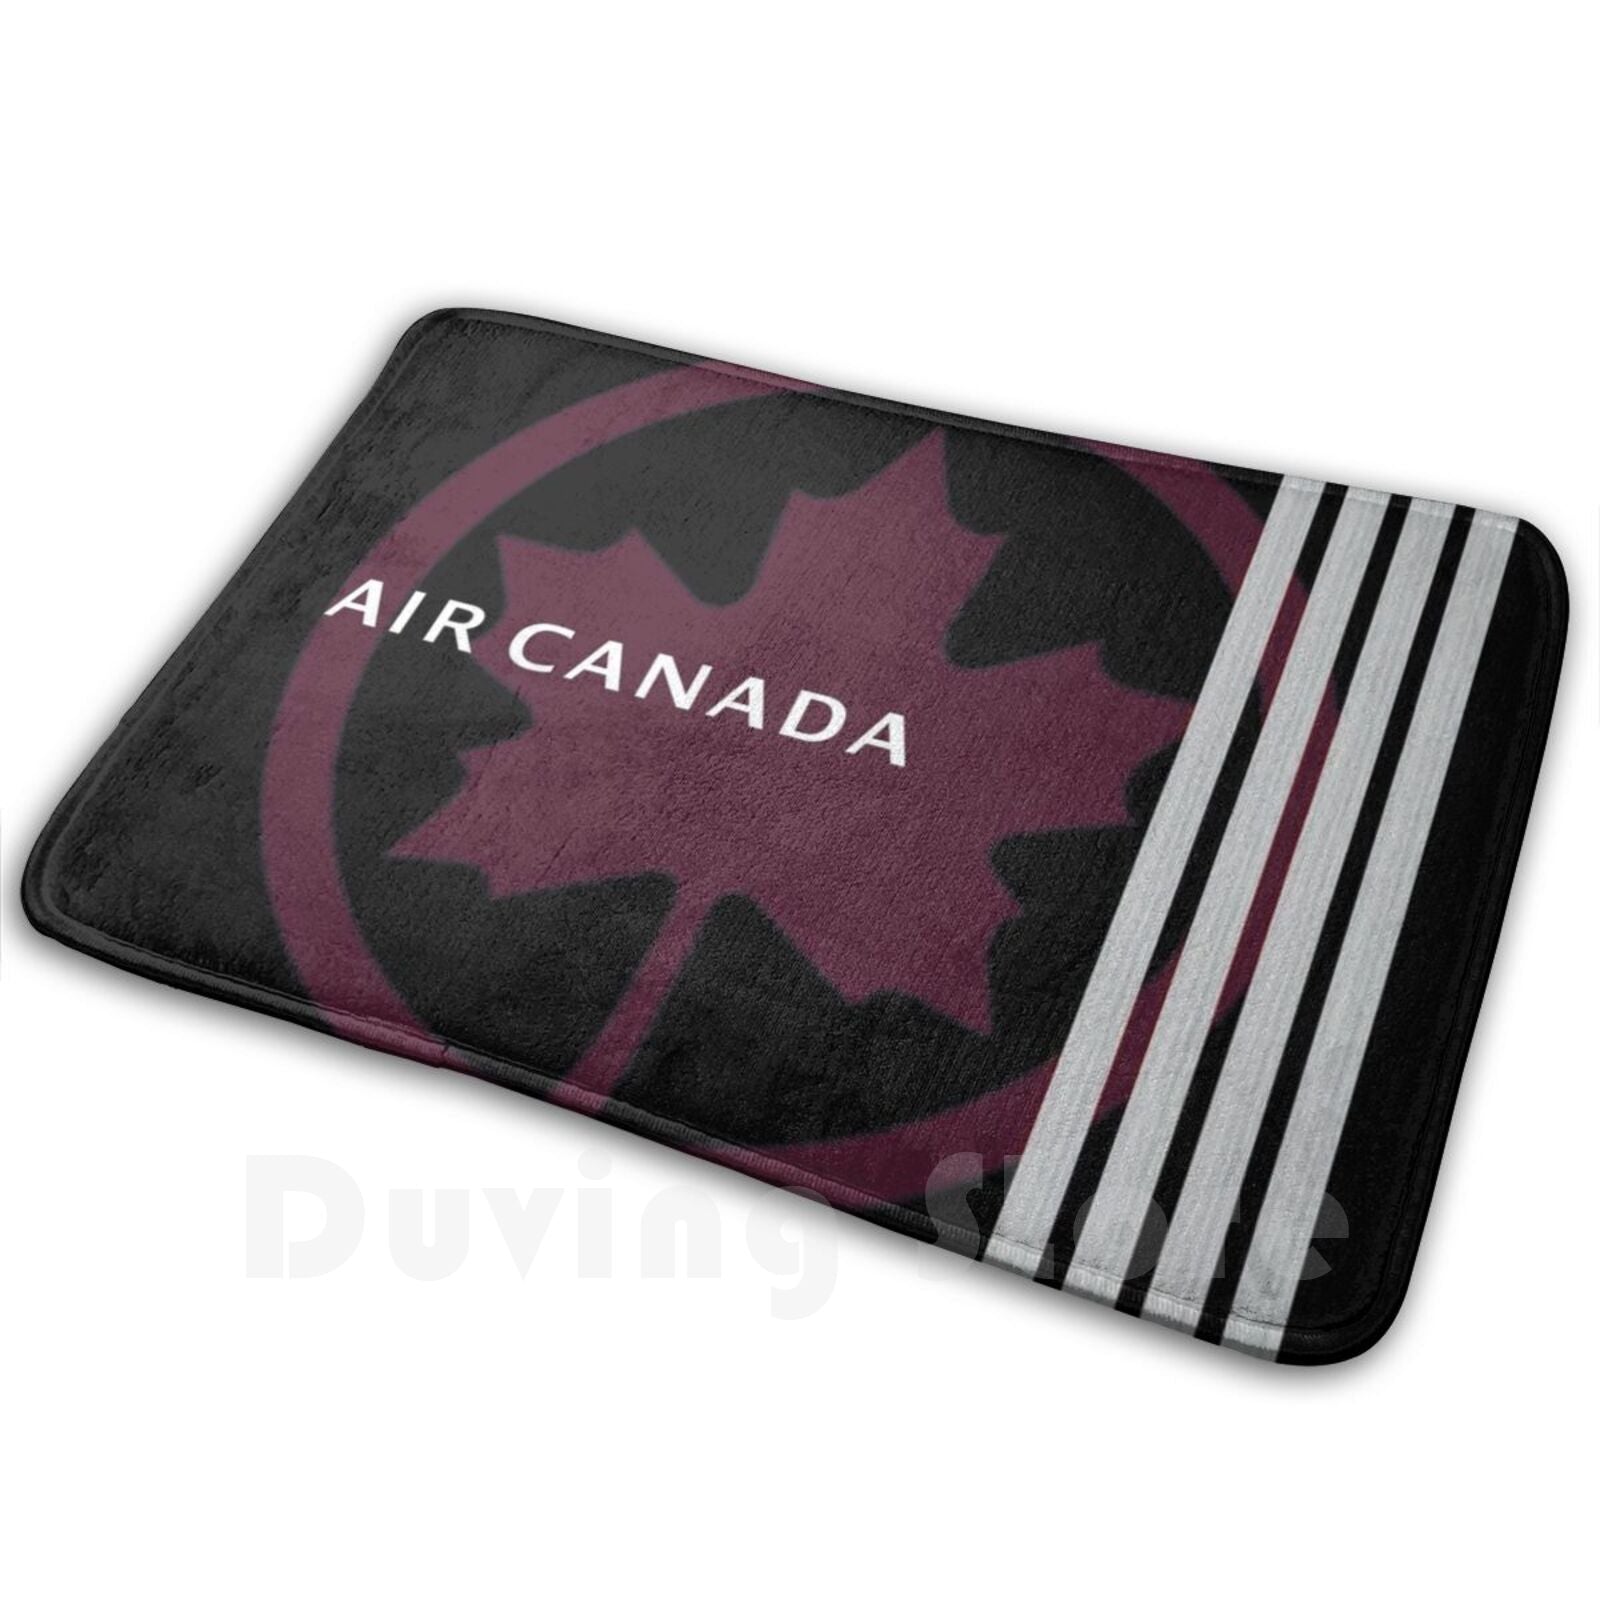 Air Canada Carpet Mat Rug Cushion Air Canada Sky Fly Flying Aviation Plane Airplane Airplane Boeing Airbus Captain Pilot